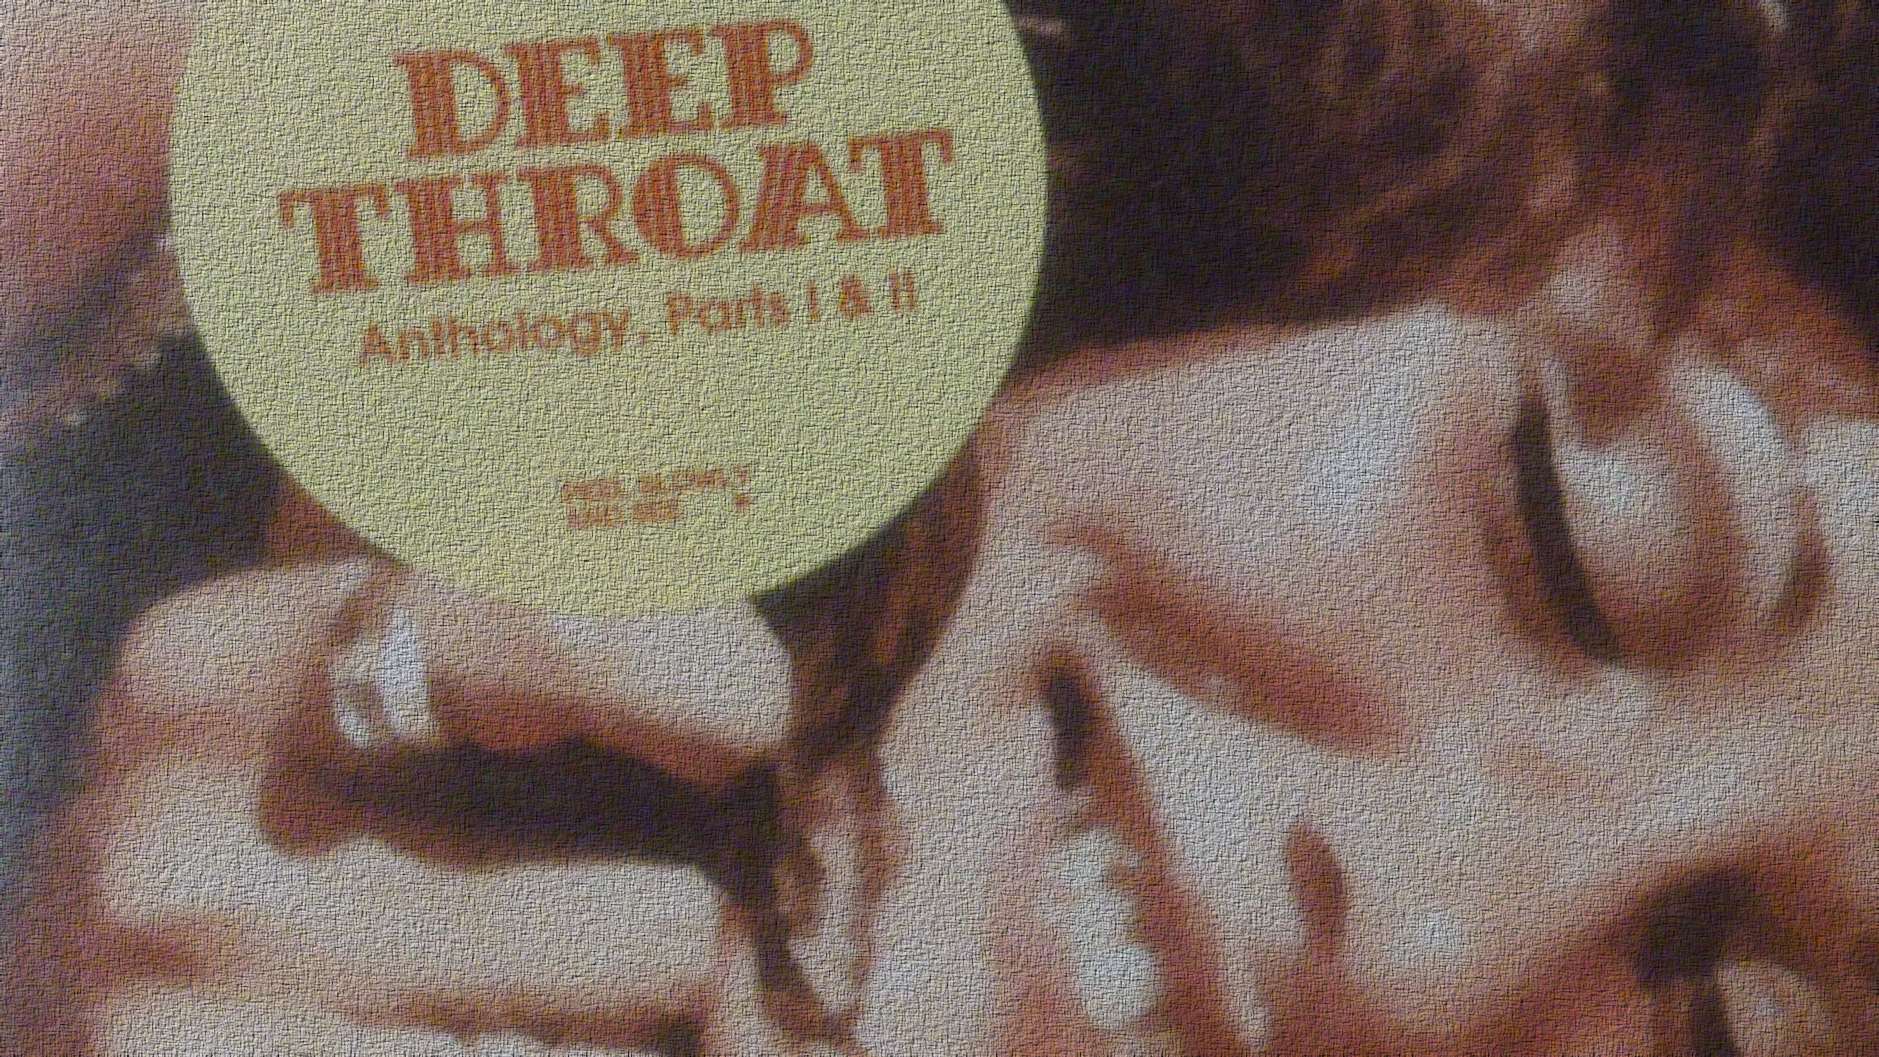 Deep Throat Film 1972 Movie Streaming